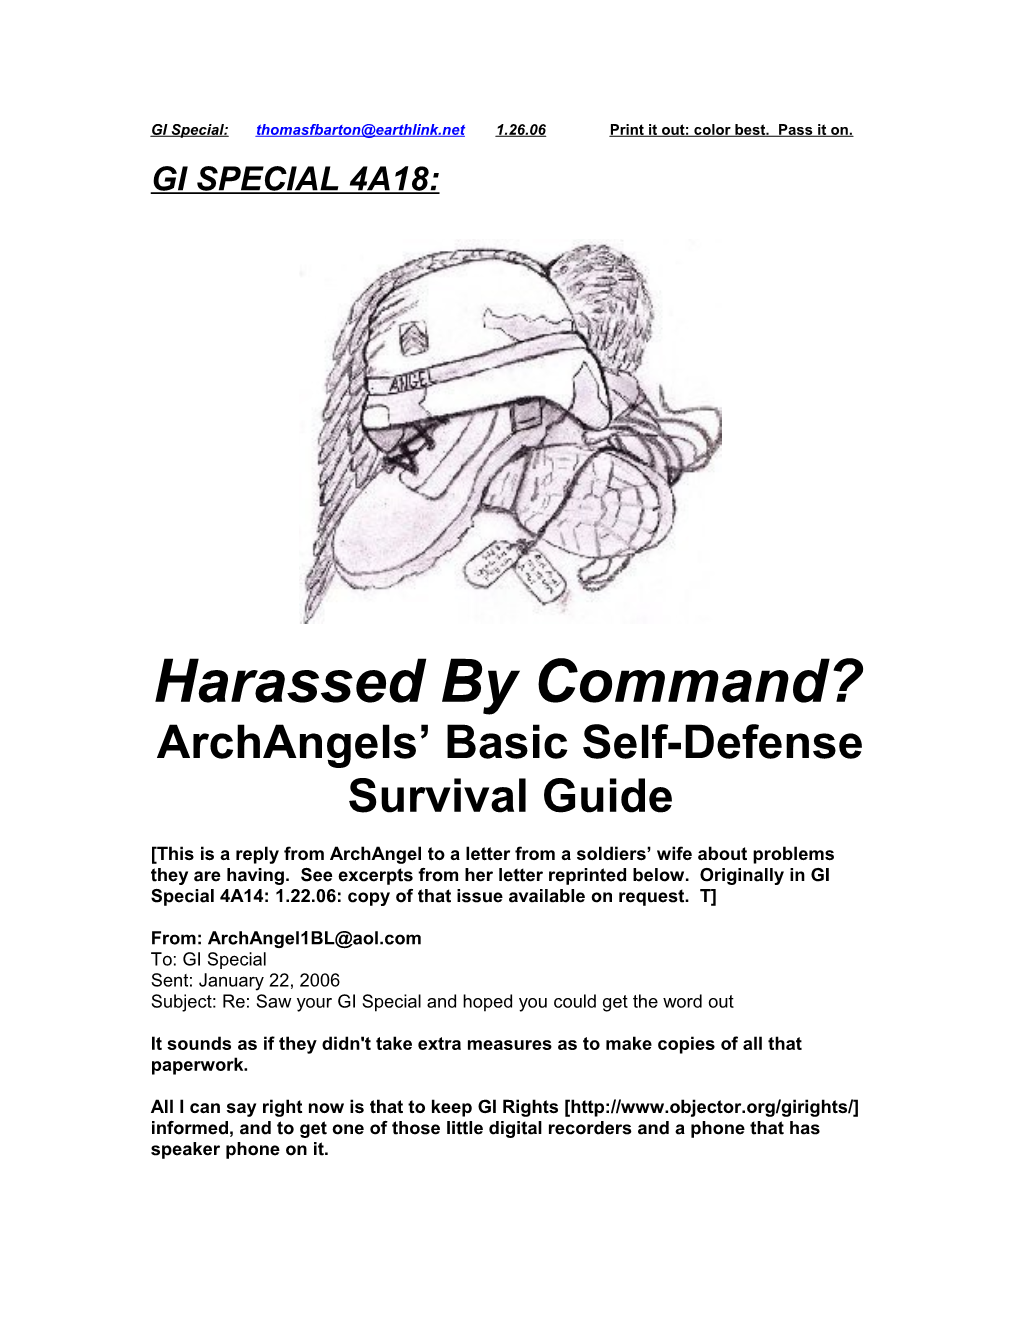 Archangels Basic Self-Defense Survival Guide